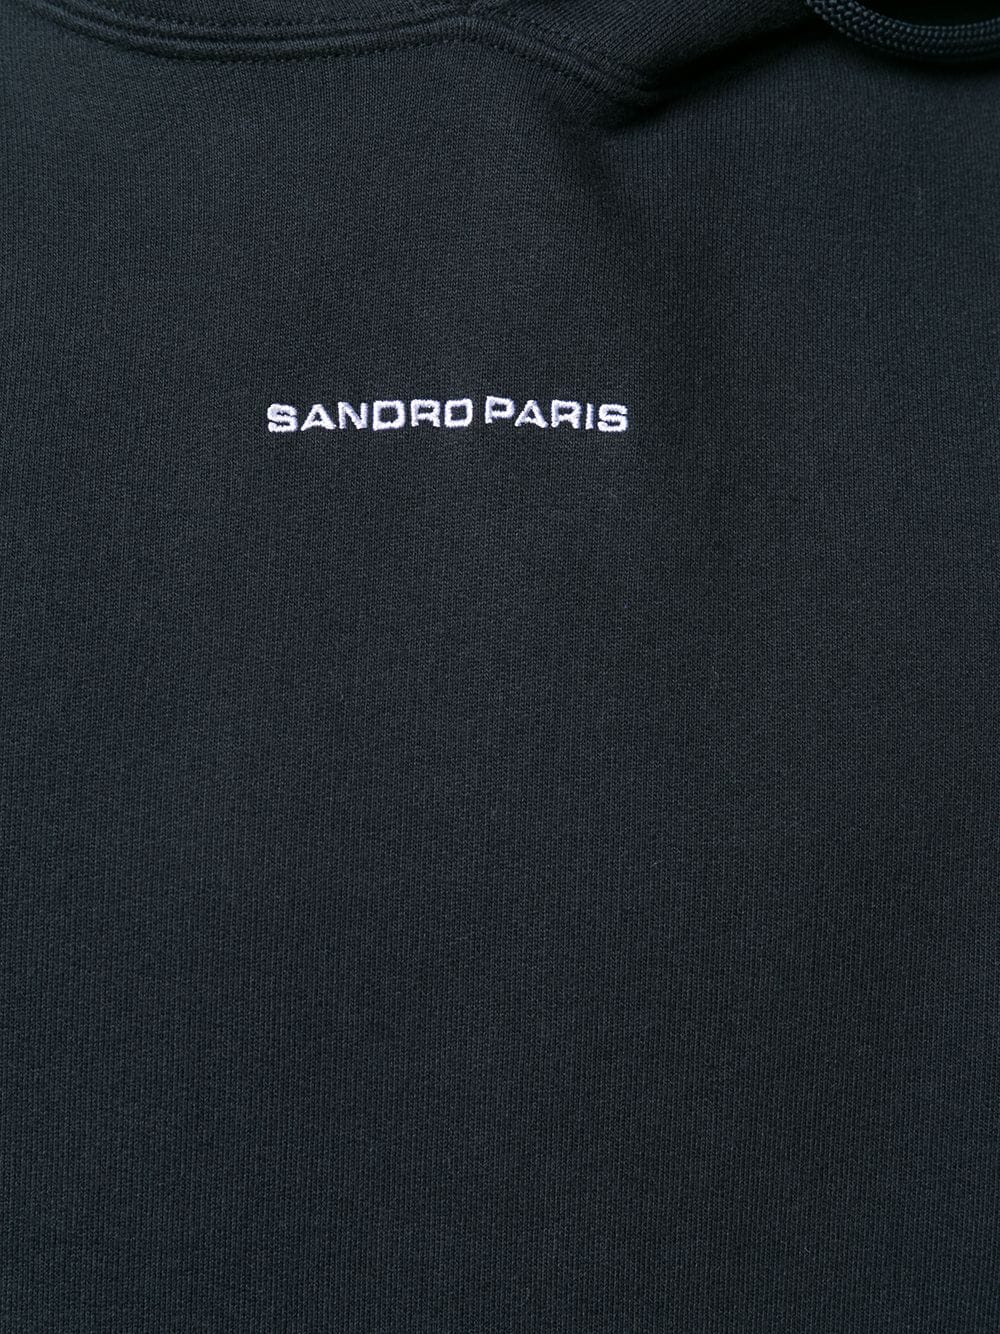 фото Sandro paris худи с кулиской и логотипом